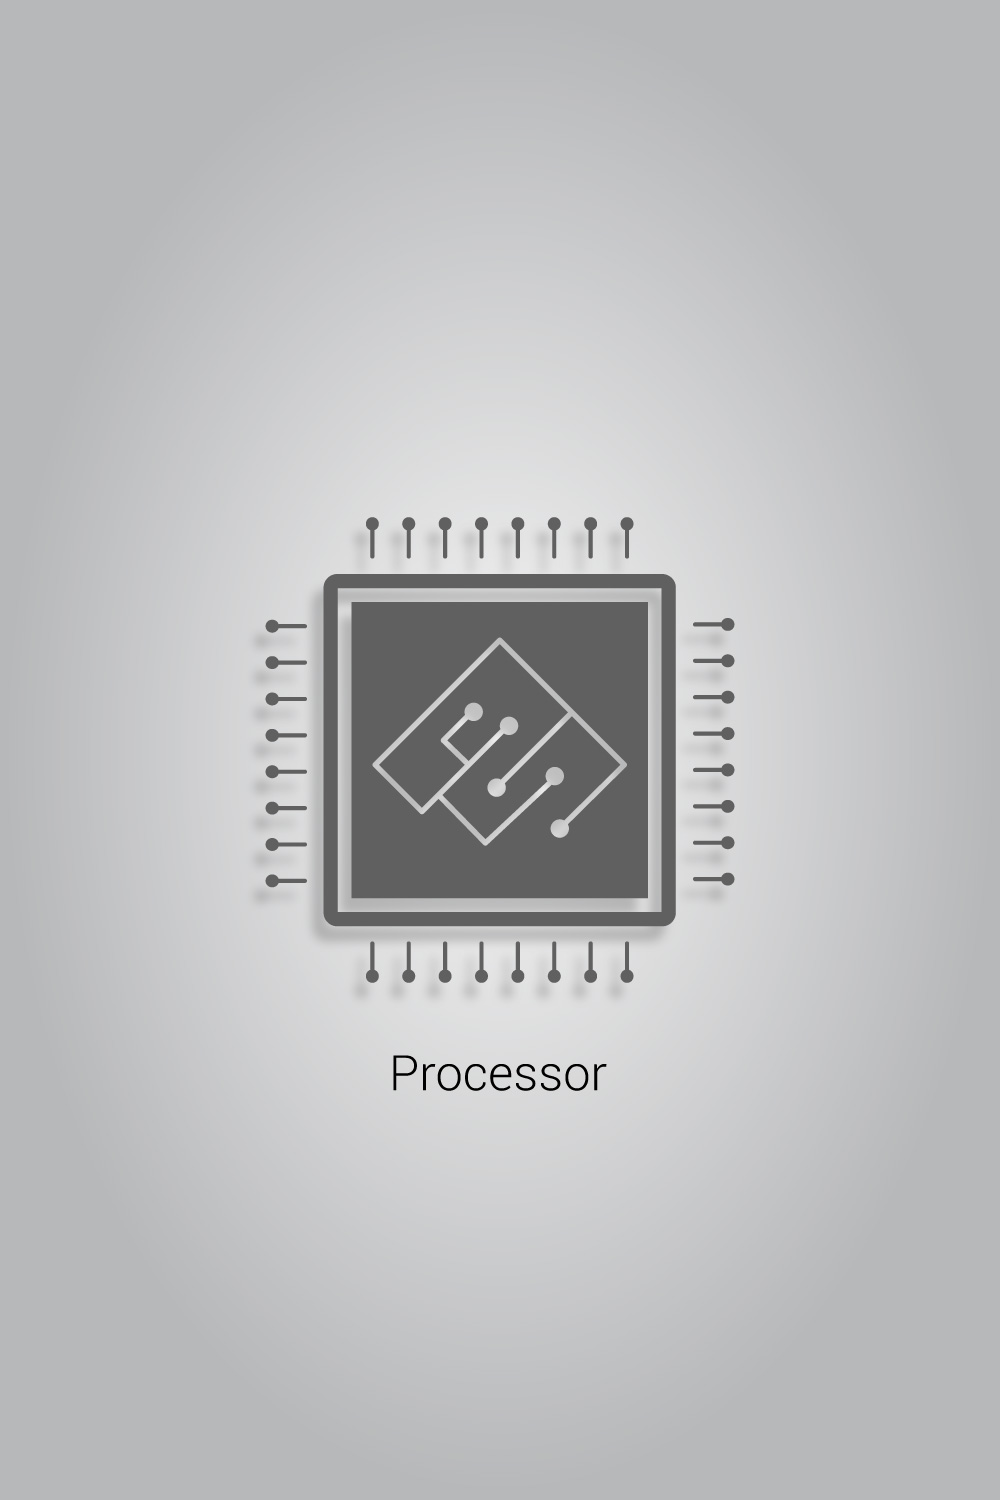 Processor logo design pinterest preview image.